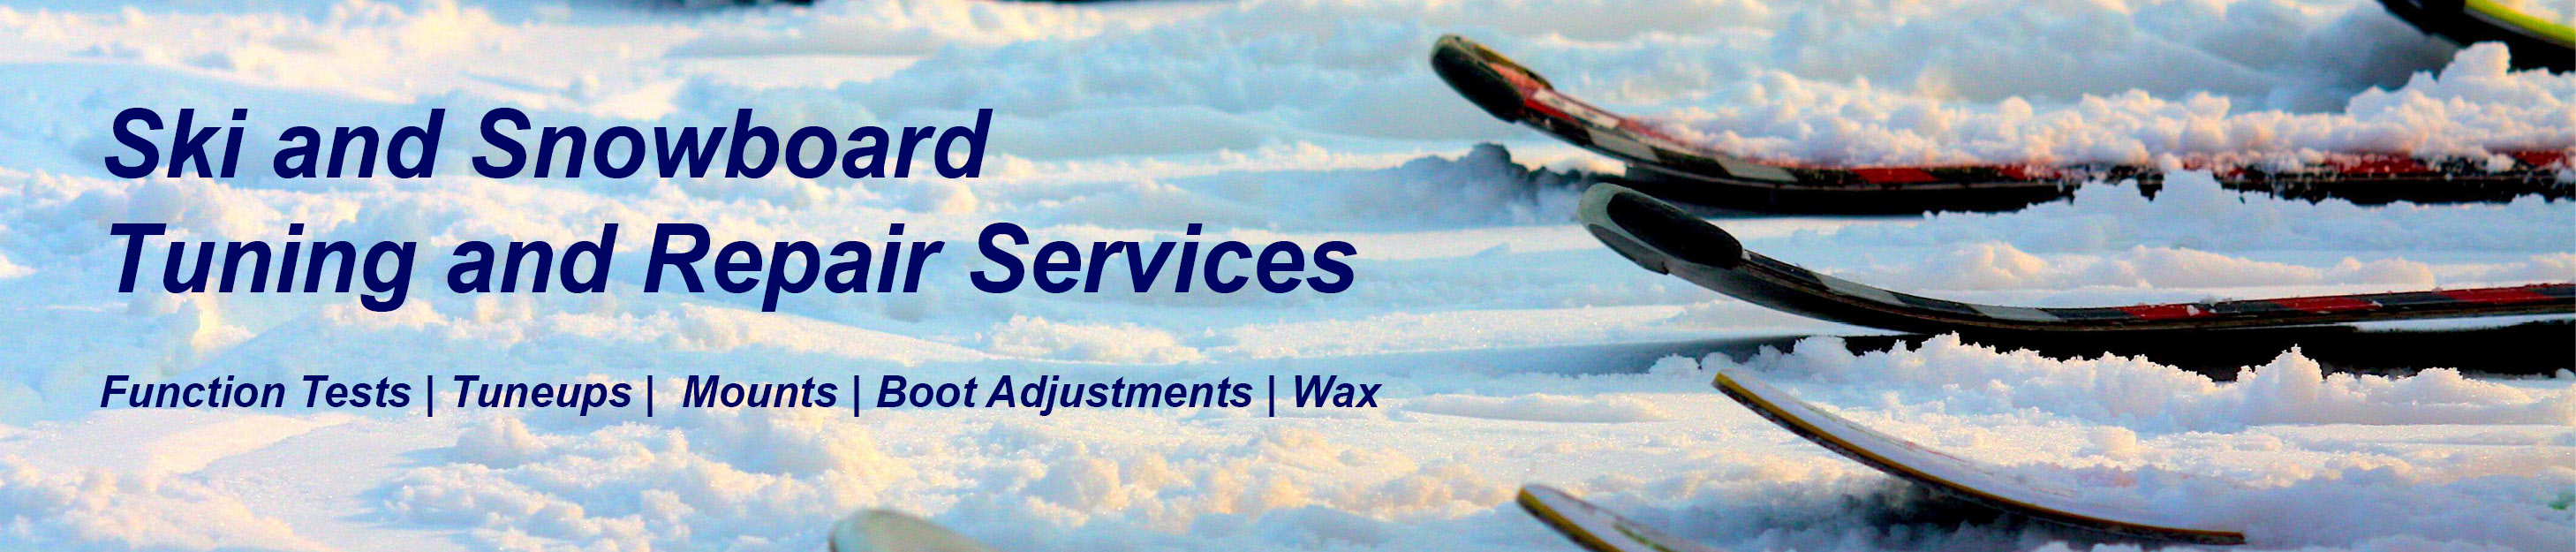 Ski and Snowboard Service and Repairs